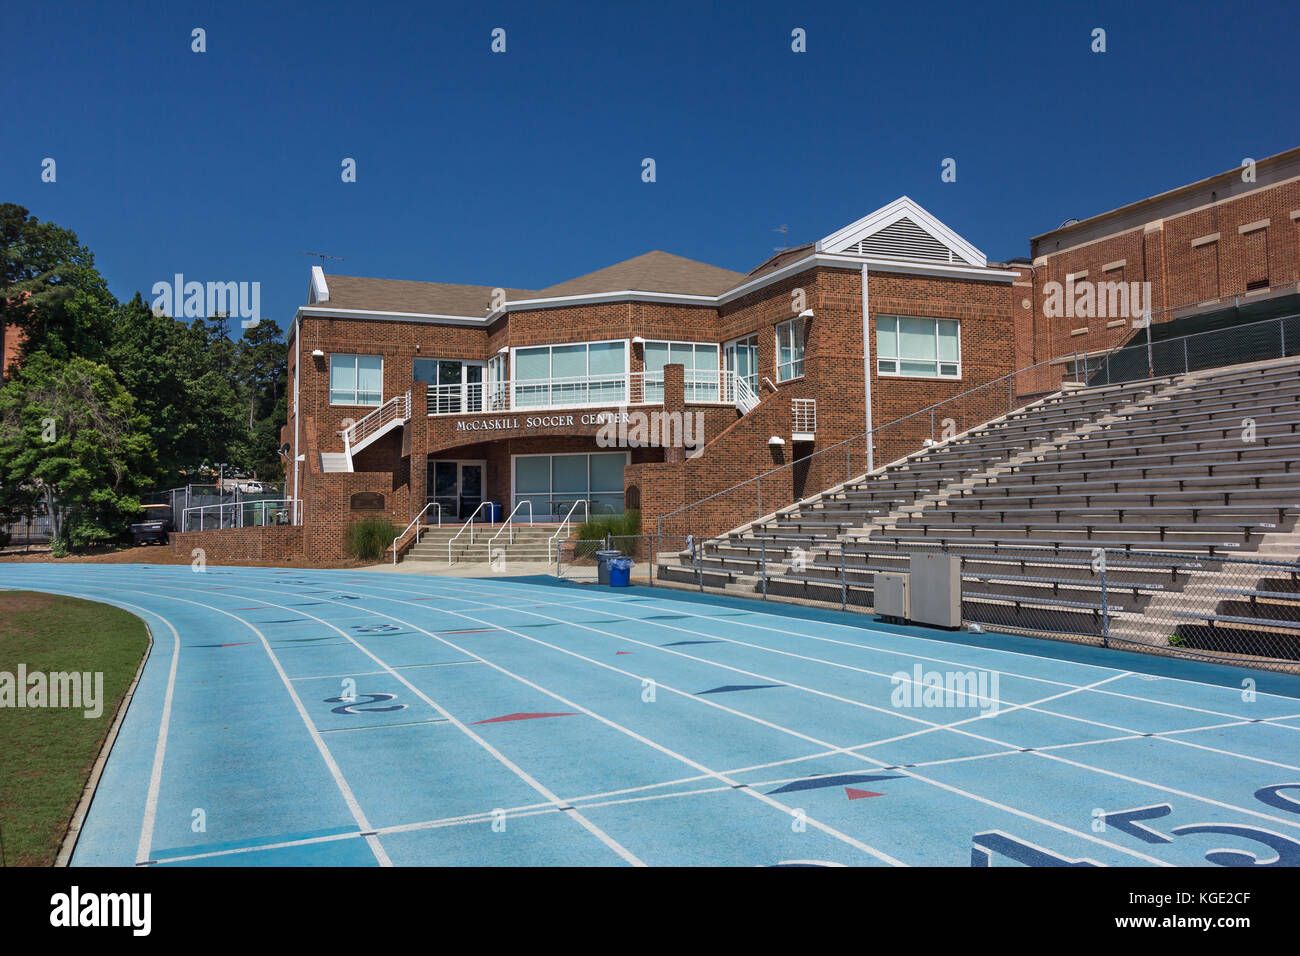 McCaskill Soccer Center at the University of North Carolina at Chapel Hill on June 6, 2015 in Chapel Hill, North Carolina.  Built 1999. Stock Photo